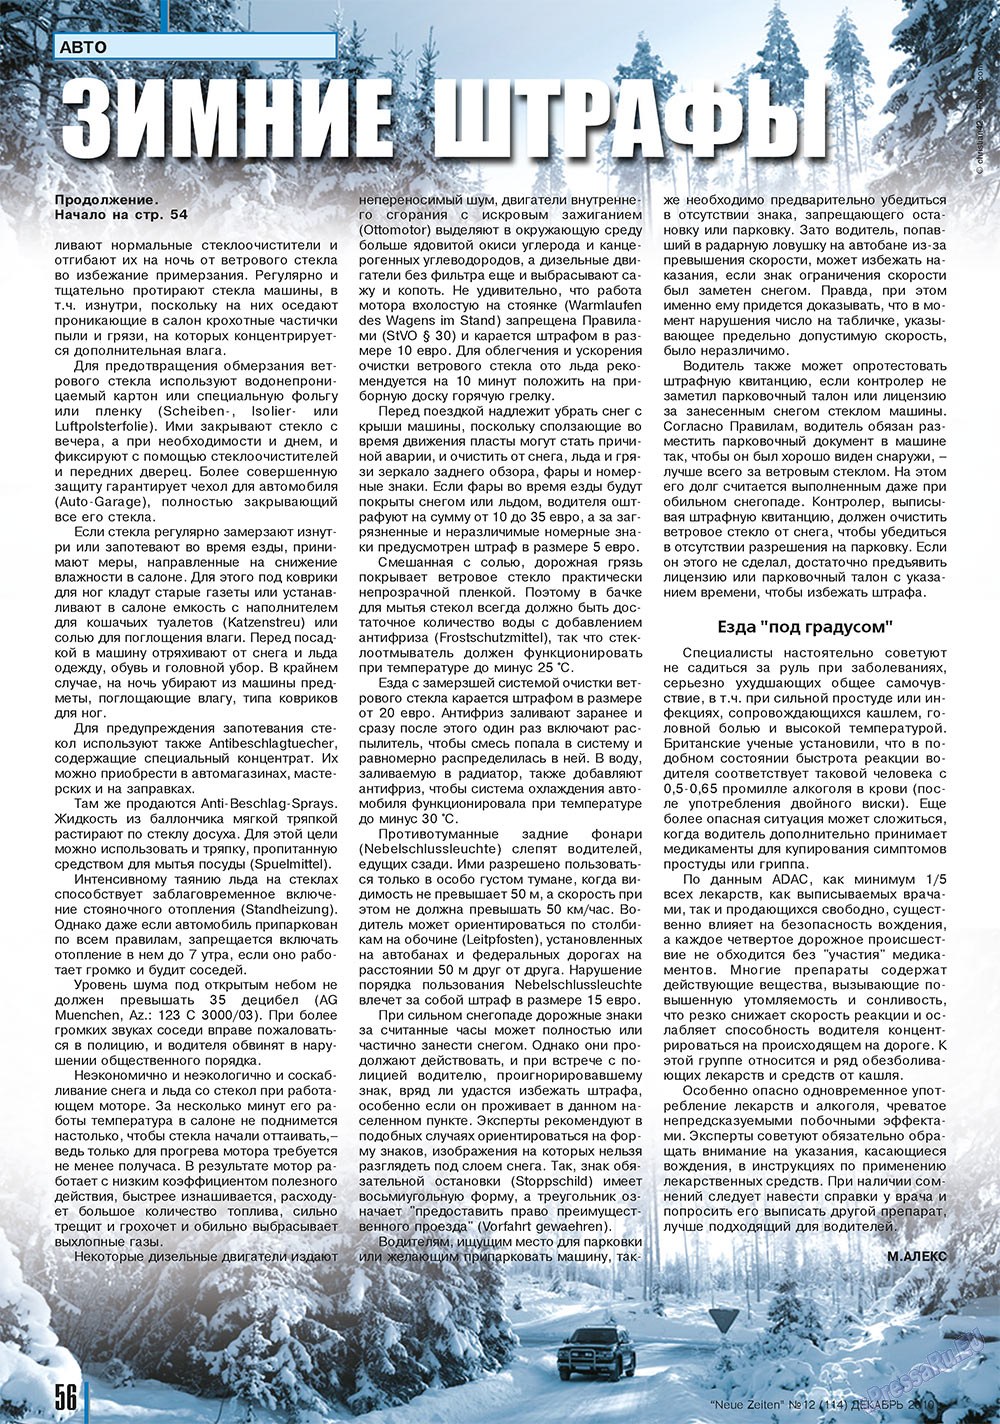 Neue Zeiten (журнал). 2010 год, номер 12, стр. 56